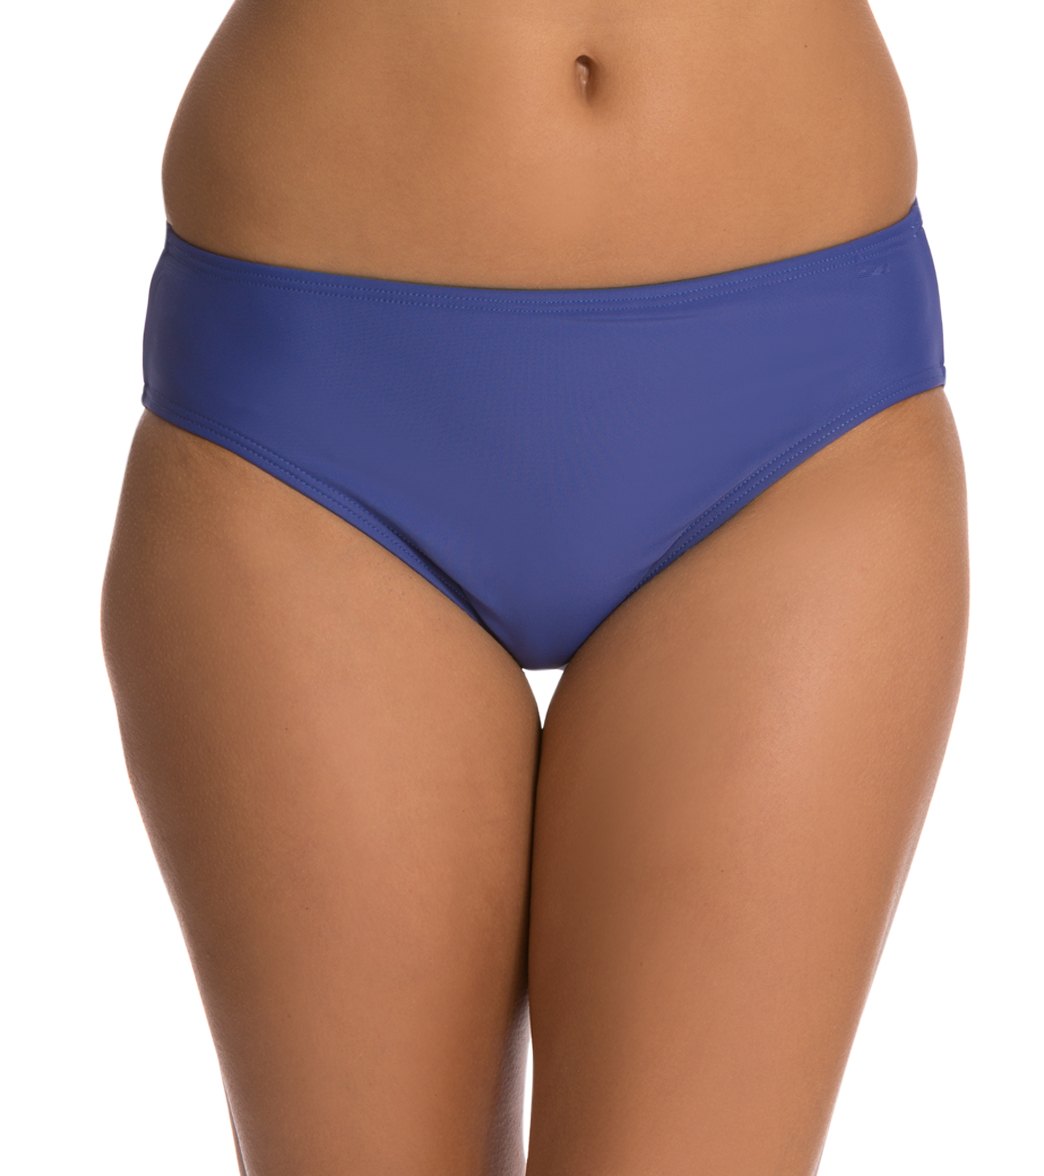 Aerin Rose Solid Classic Hipster Bikini Bottom - Ombre Lapis Xl Nylon/Spandex - Swimoutlet.com